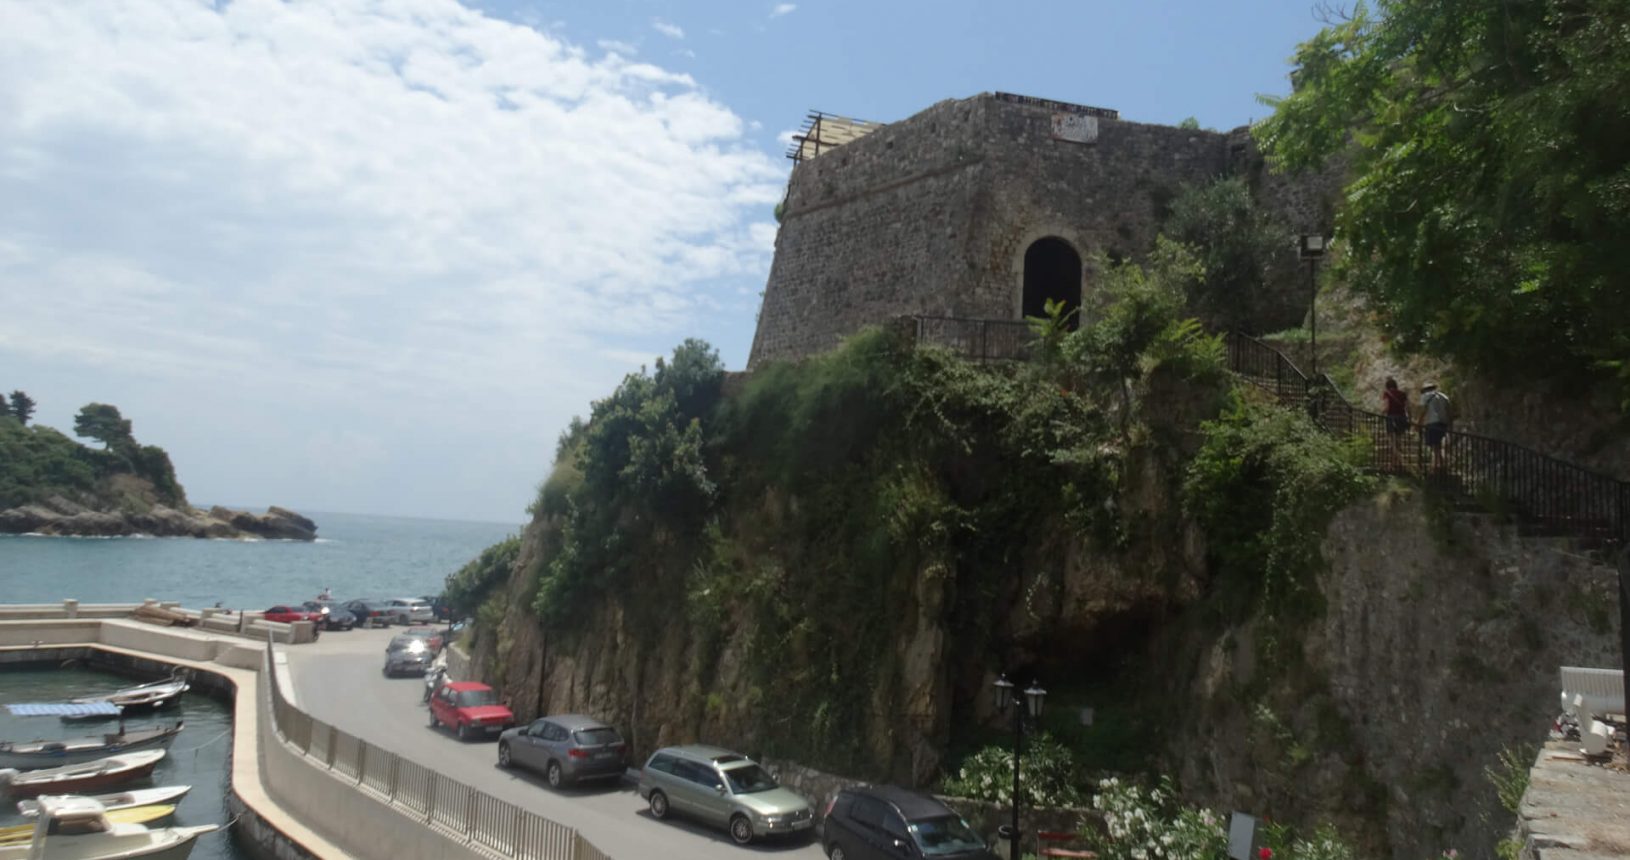 Ulcinj old town wall and coastline